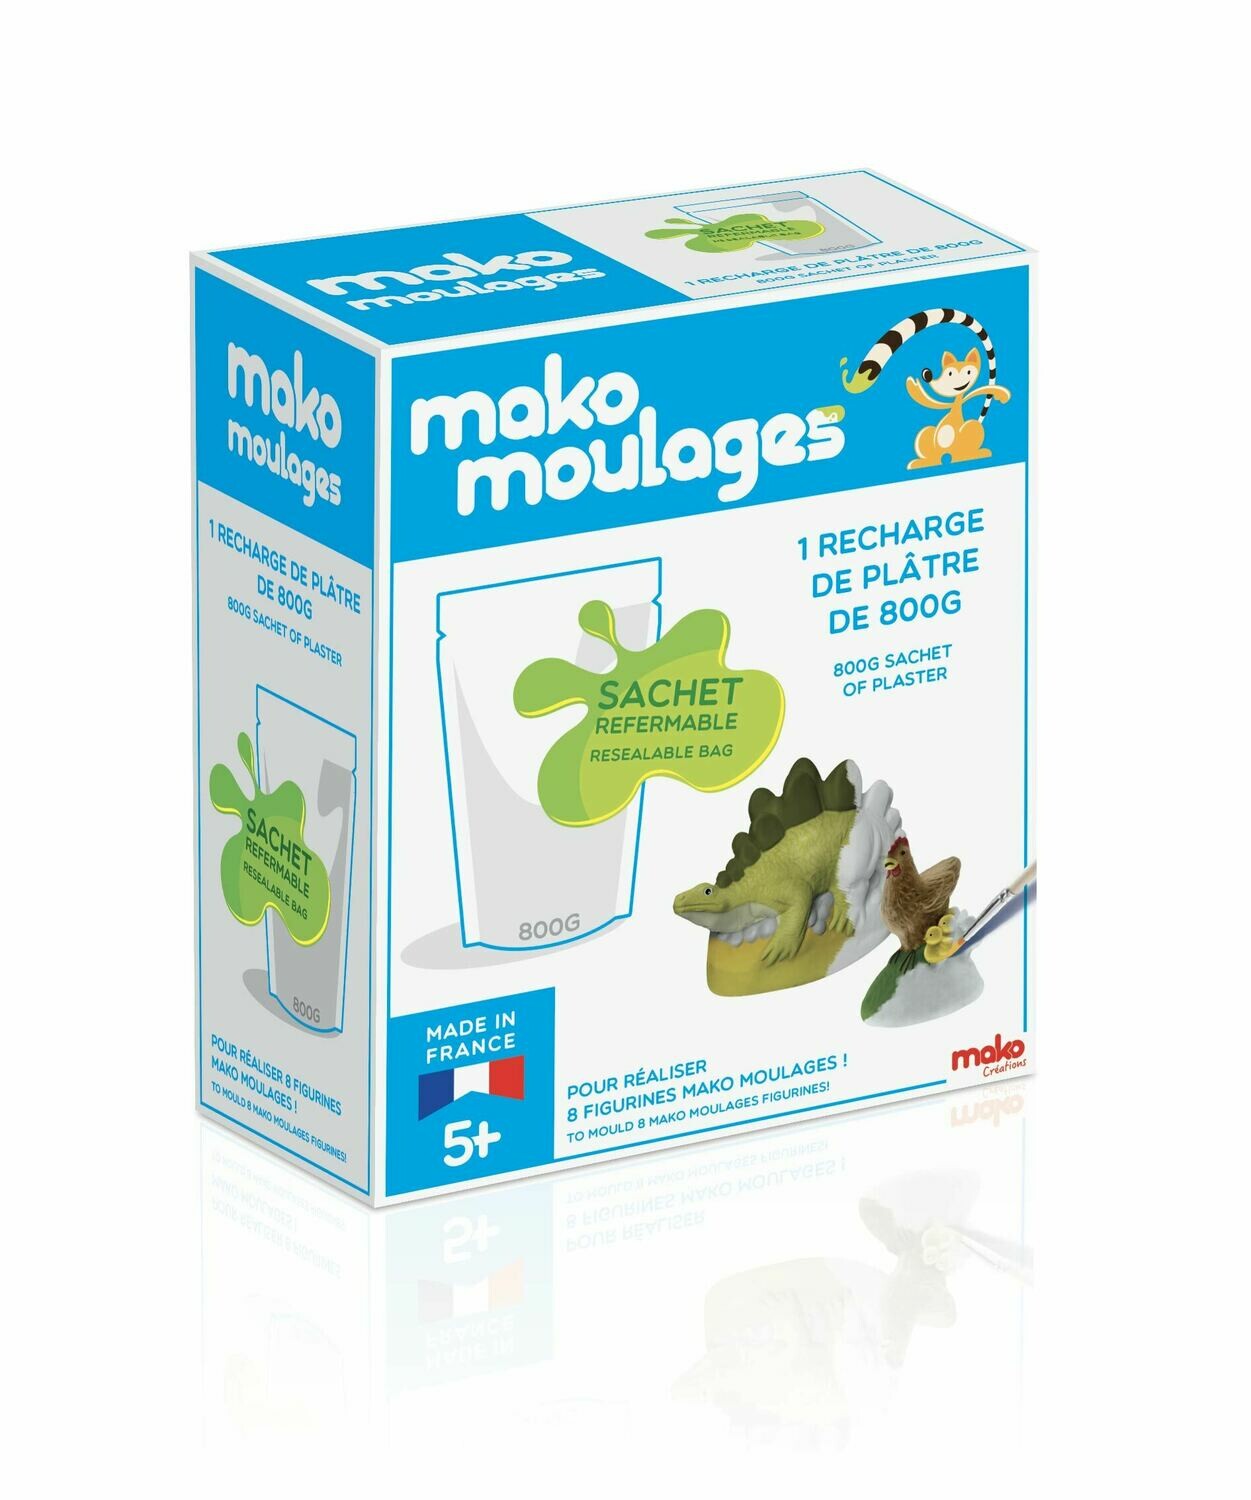 Mako moulages - Recharge plâtre 800g